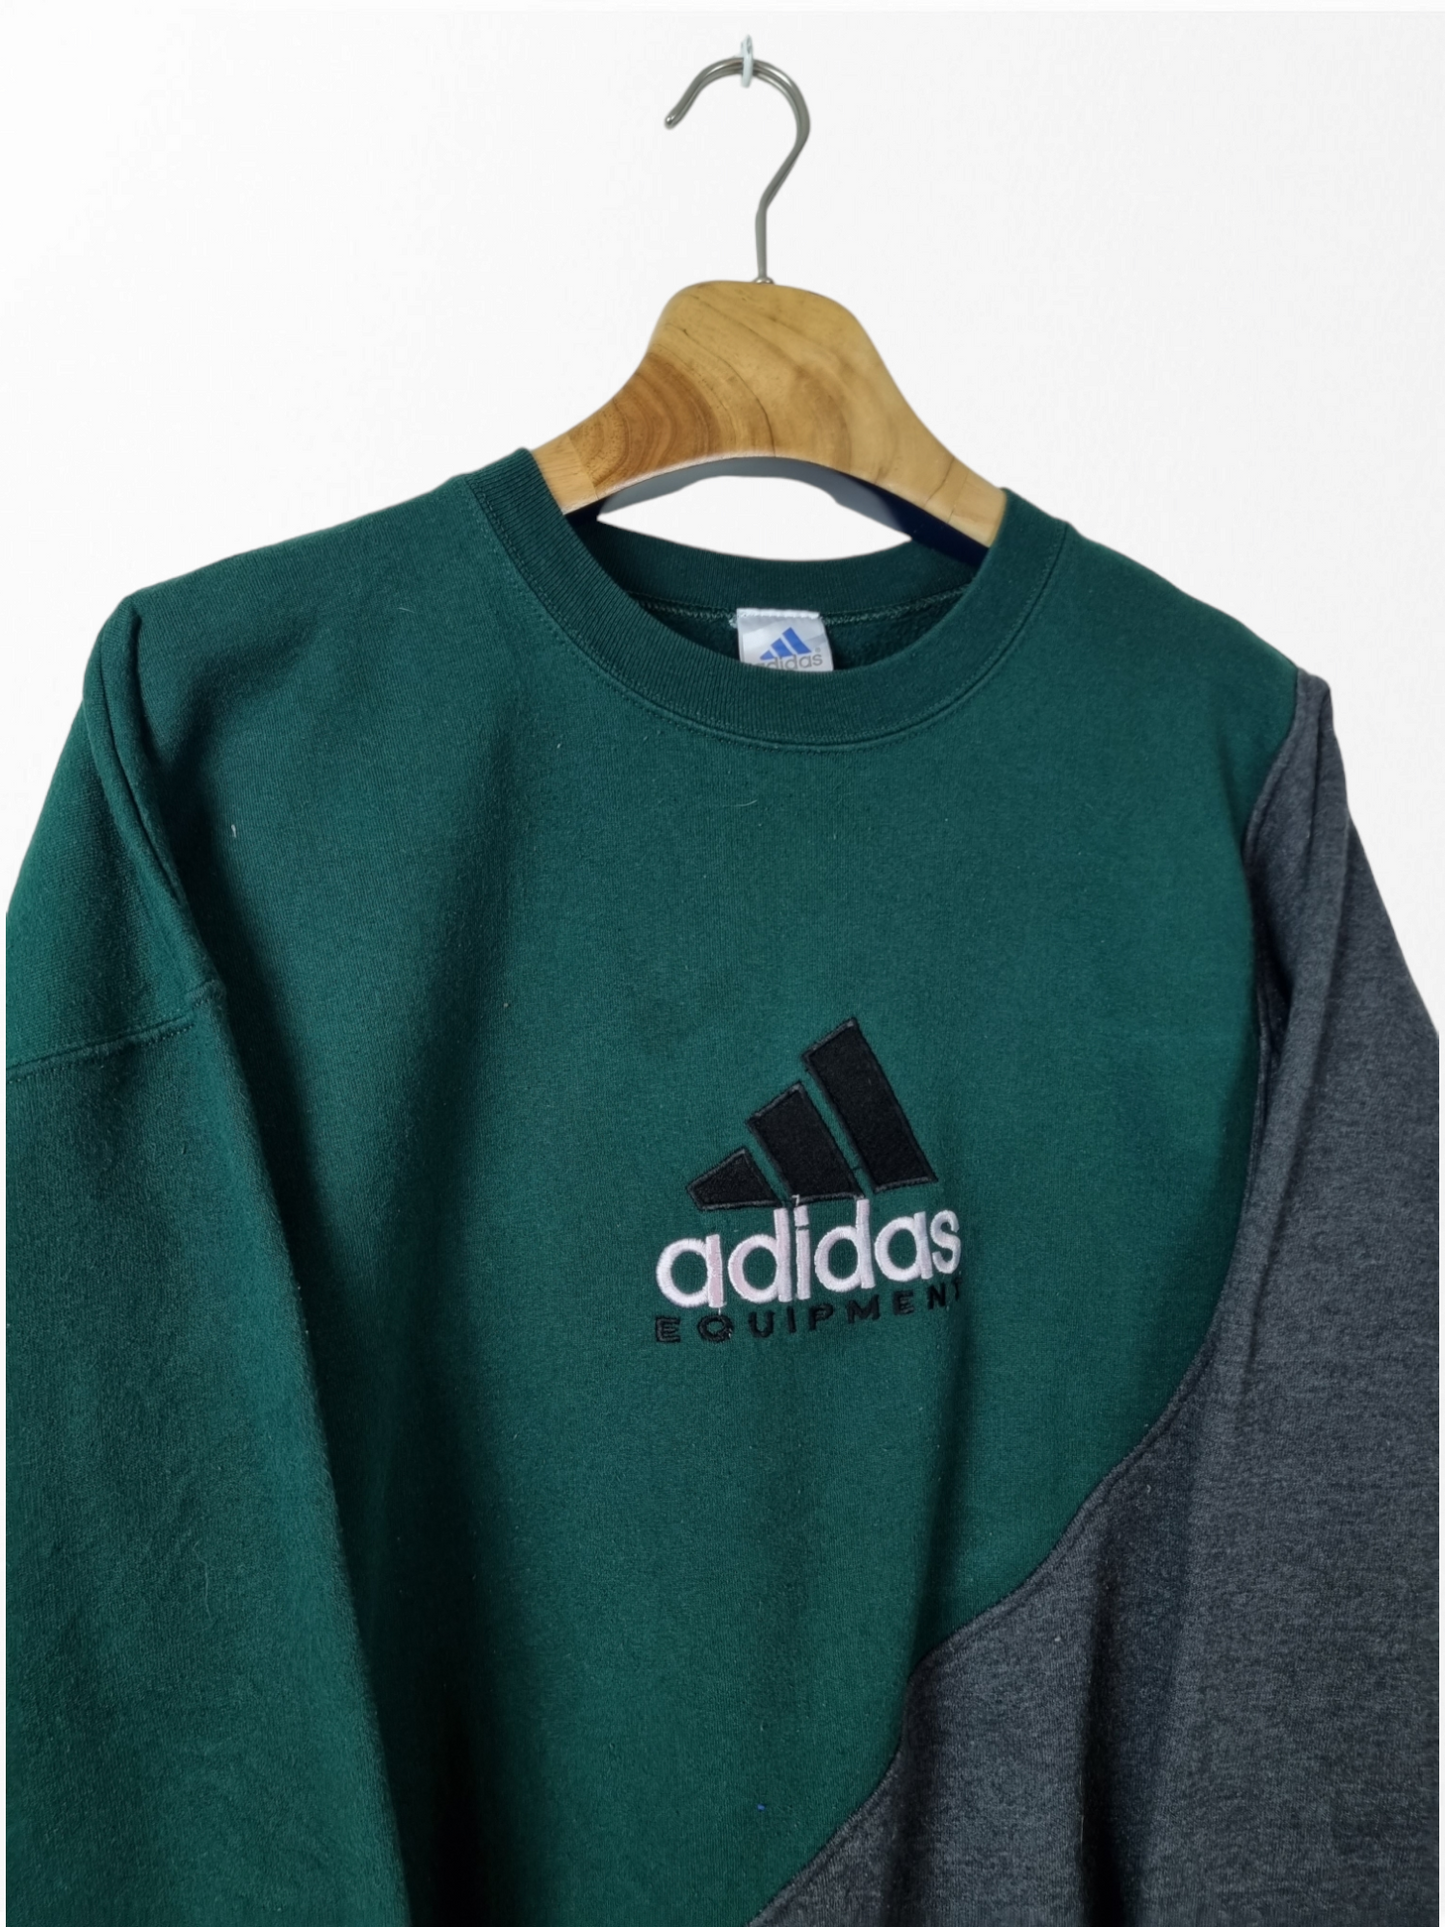 Adidas 90s equipement sweater maat  L